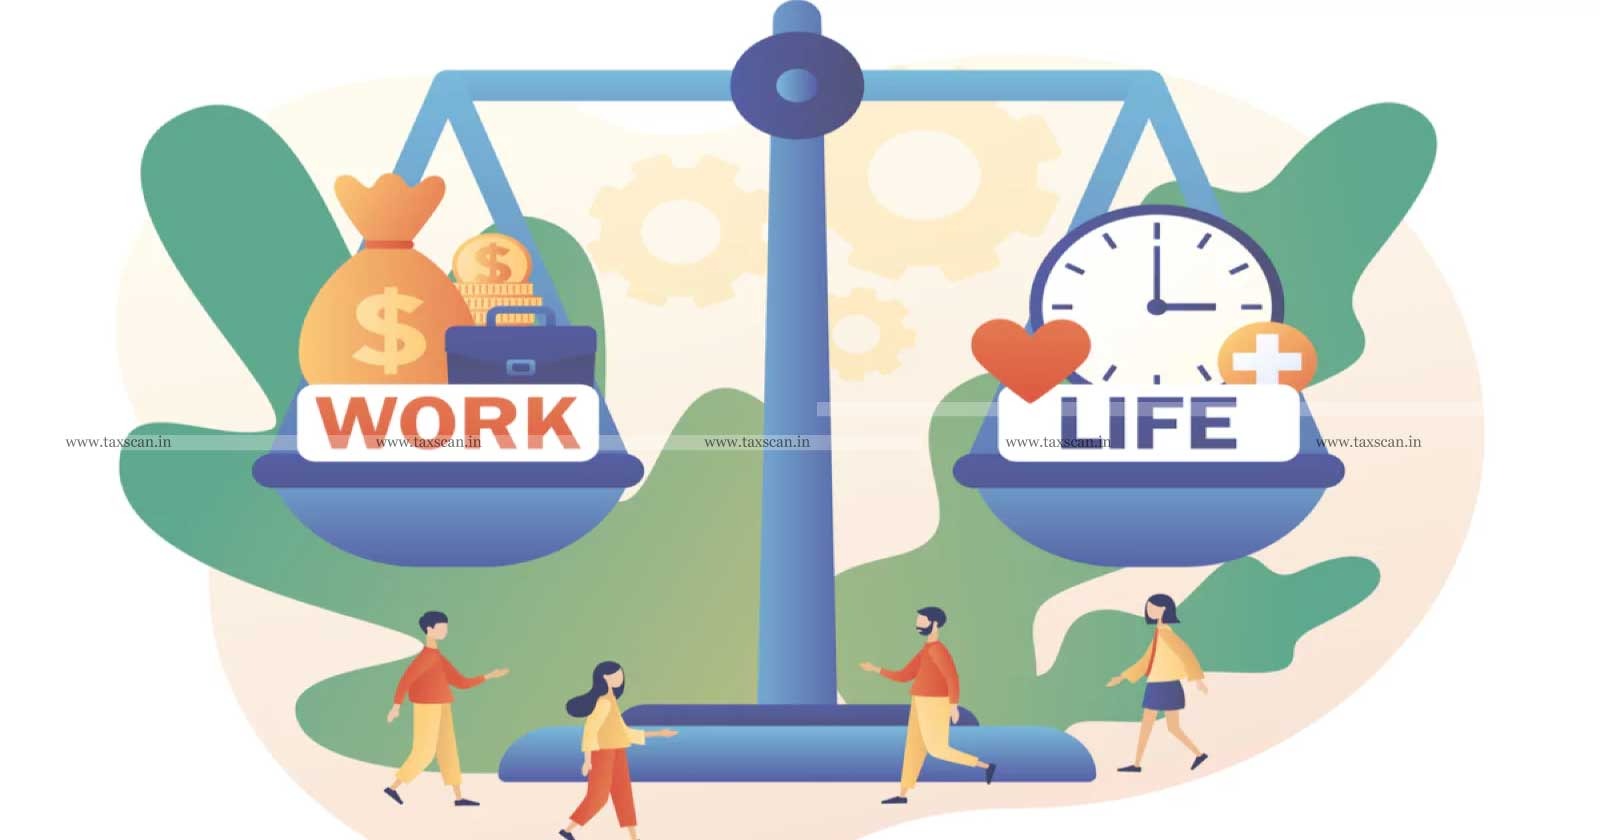 Work-Life Balance - Accounting Firms - Flexible Working Hours - Tax Season - taxscan